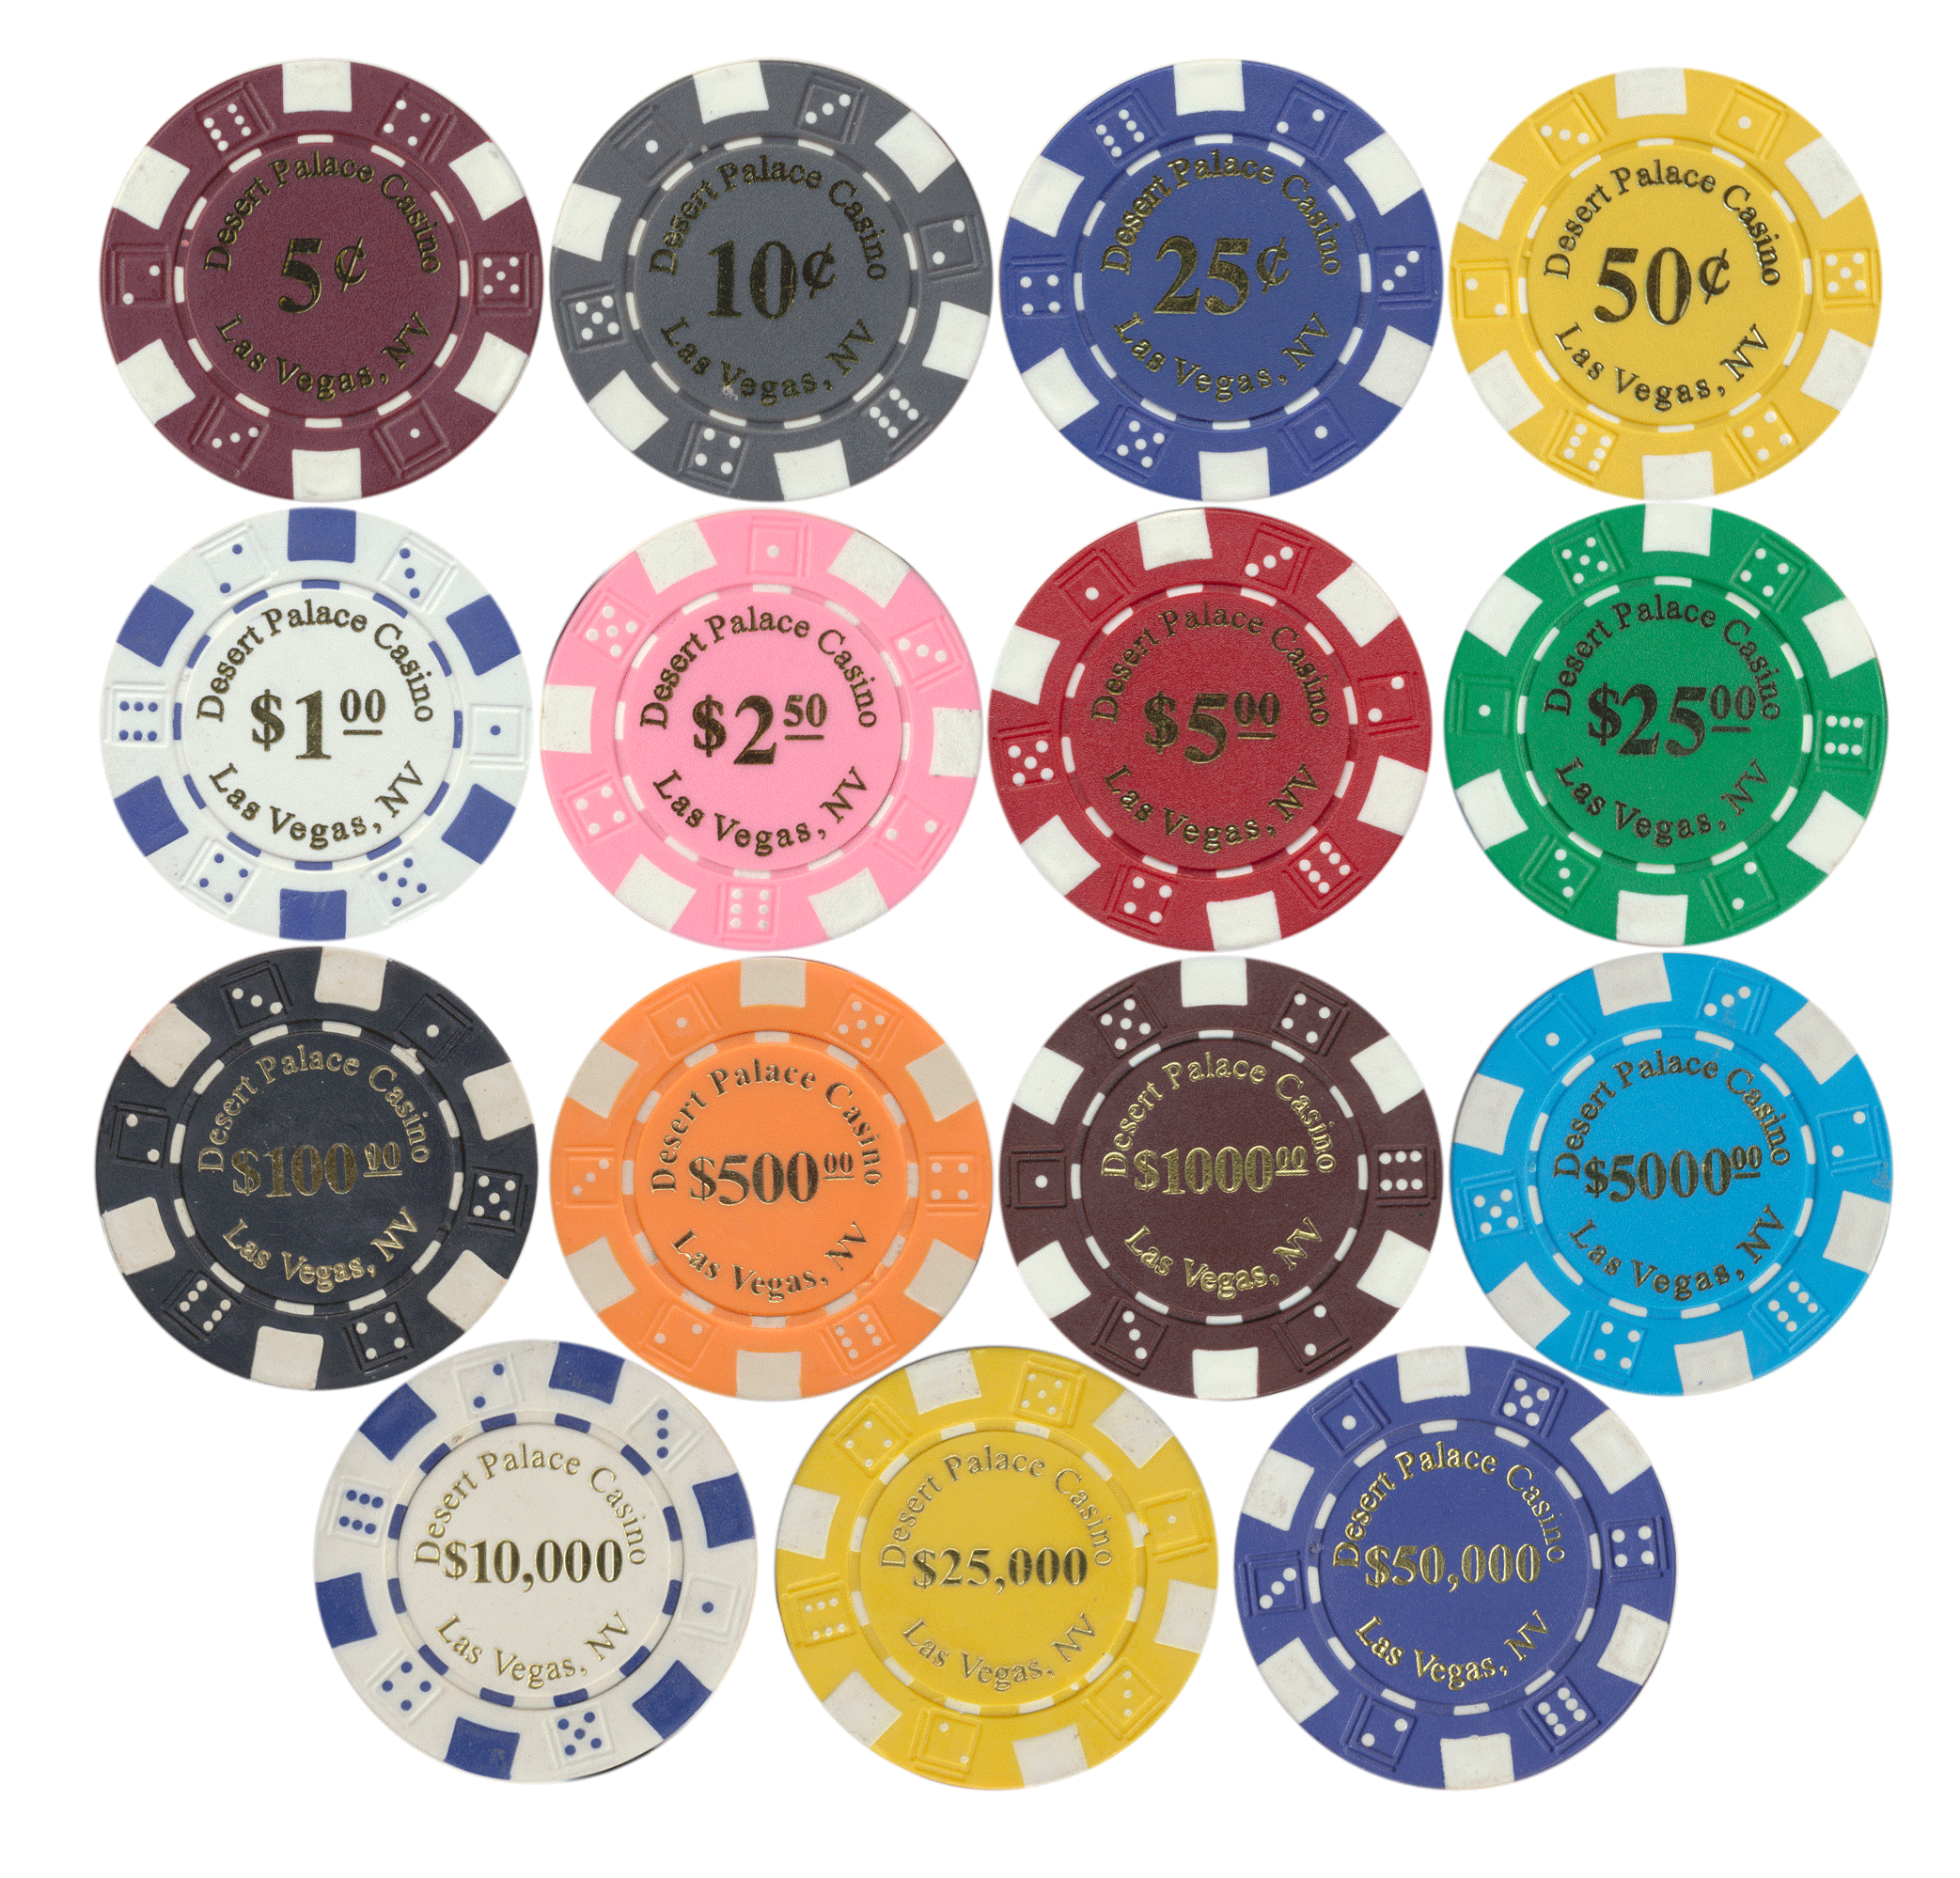 25 Blue $10 Las Vegas 14g Clay Poker Chips New Get 1 Free Buy 2 